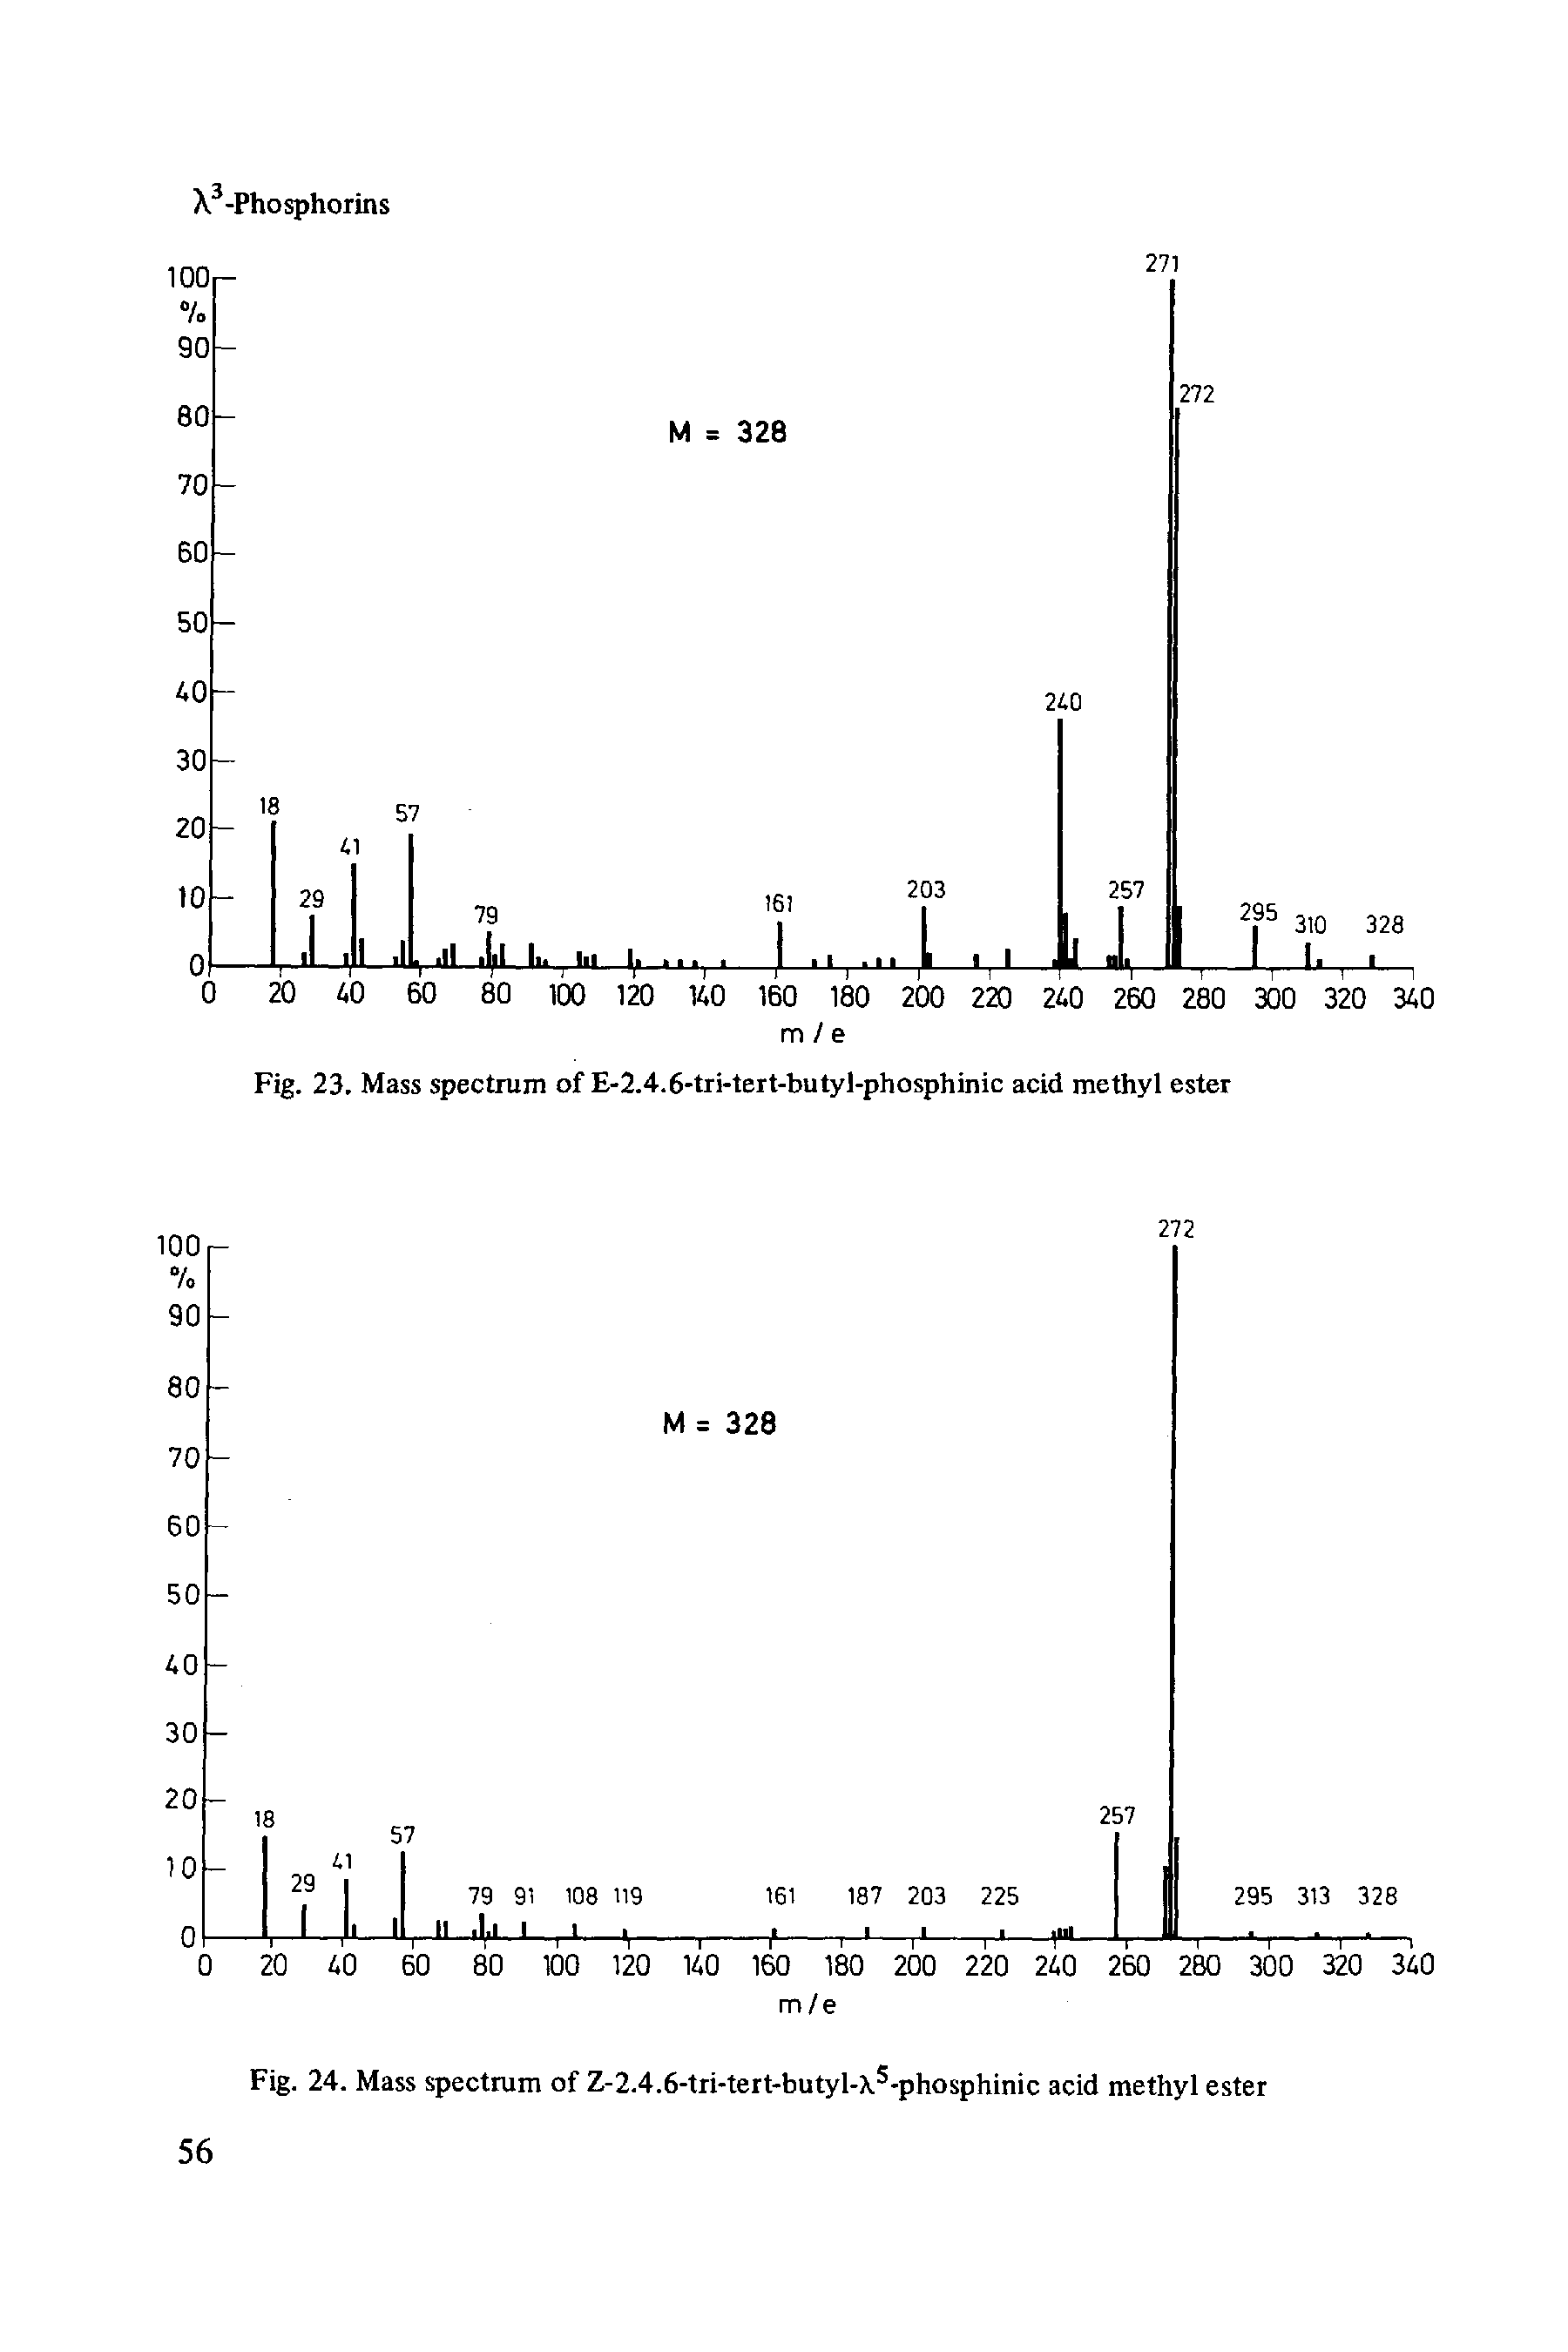 Fig. 24. Mass spectrum of Z-2.4.6-tri-tert-butyl- -phosphinic acid methyl ester...